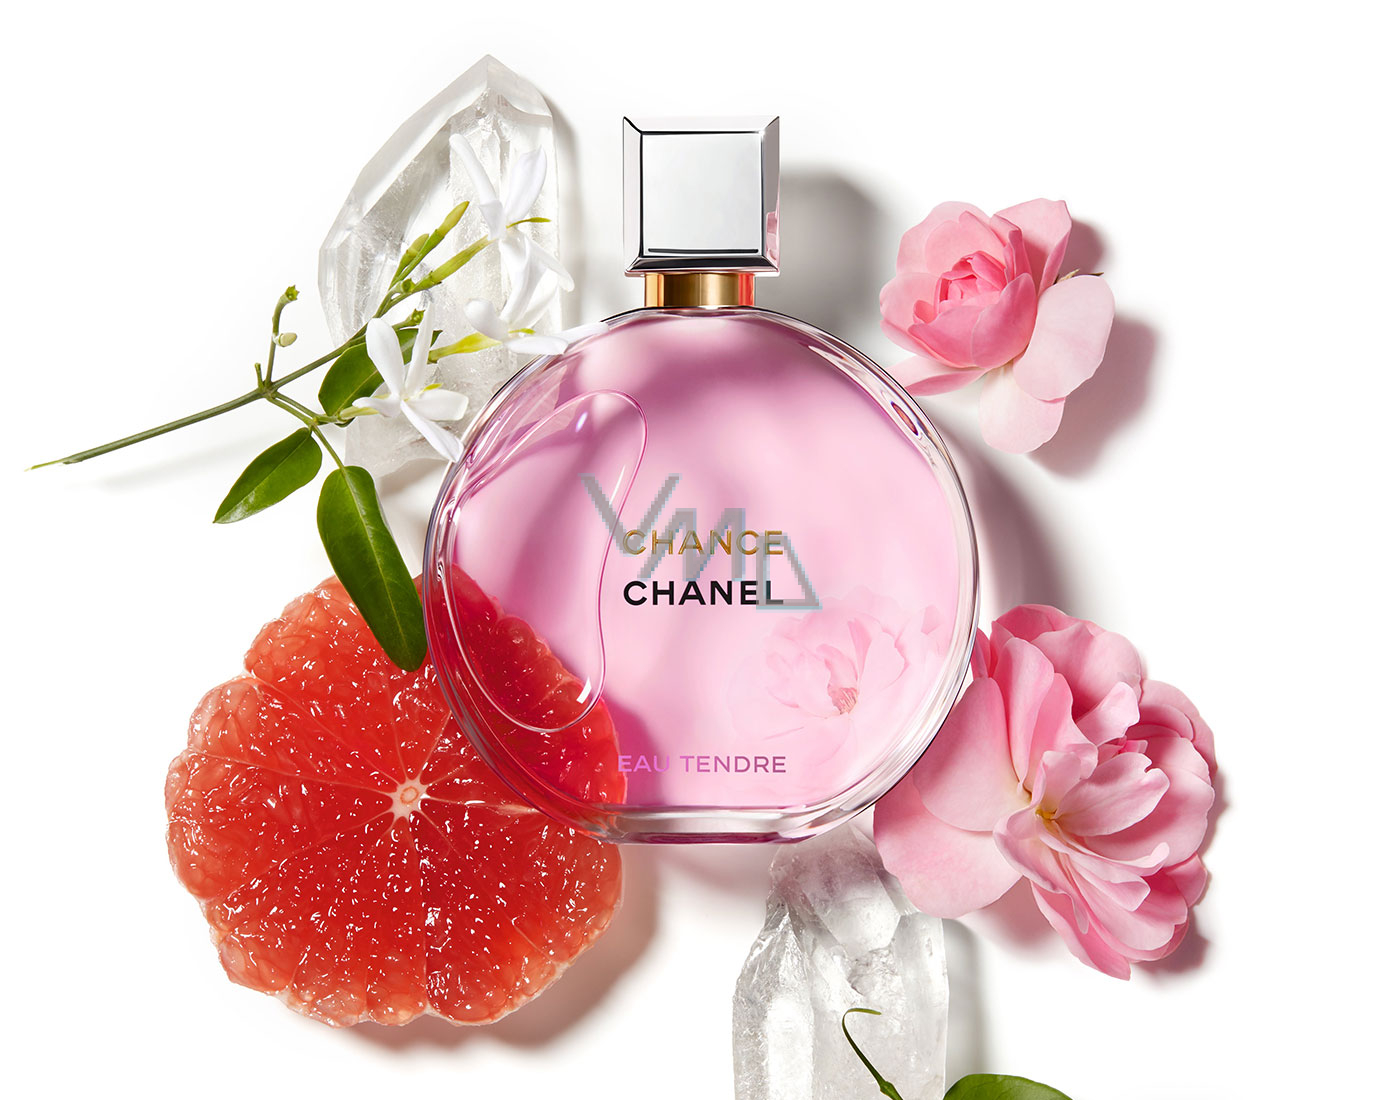 Om toevlucht te zoeken majoor Regeneratief Chanel Chance Eau Tendre Eau de Parfum for Women 100 ml - VMD parfumerie -  drogerie